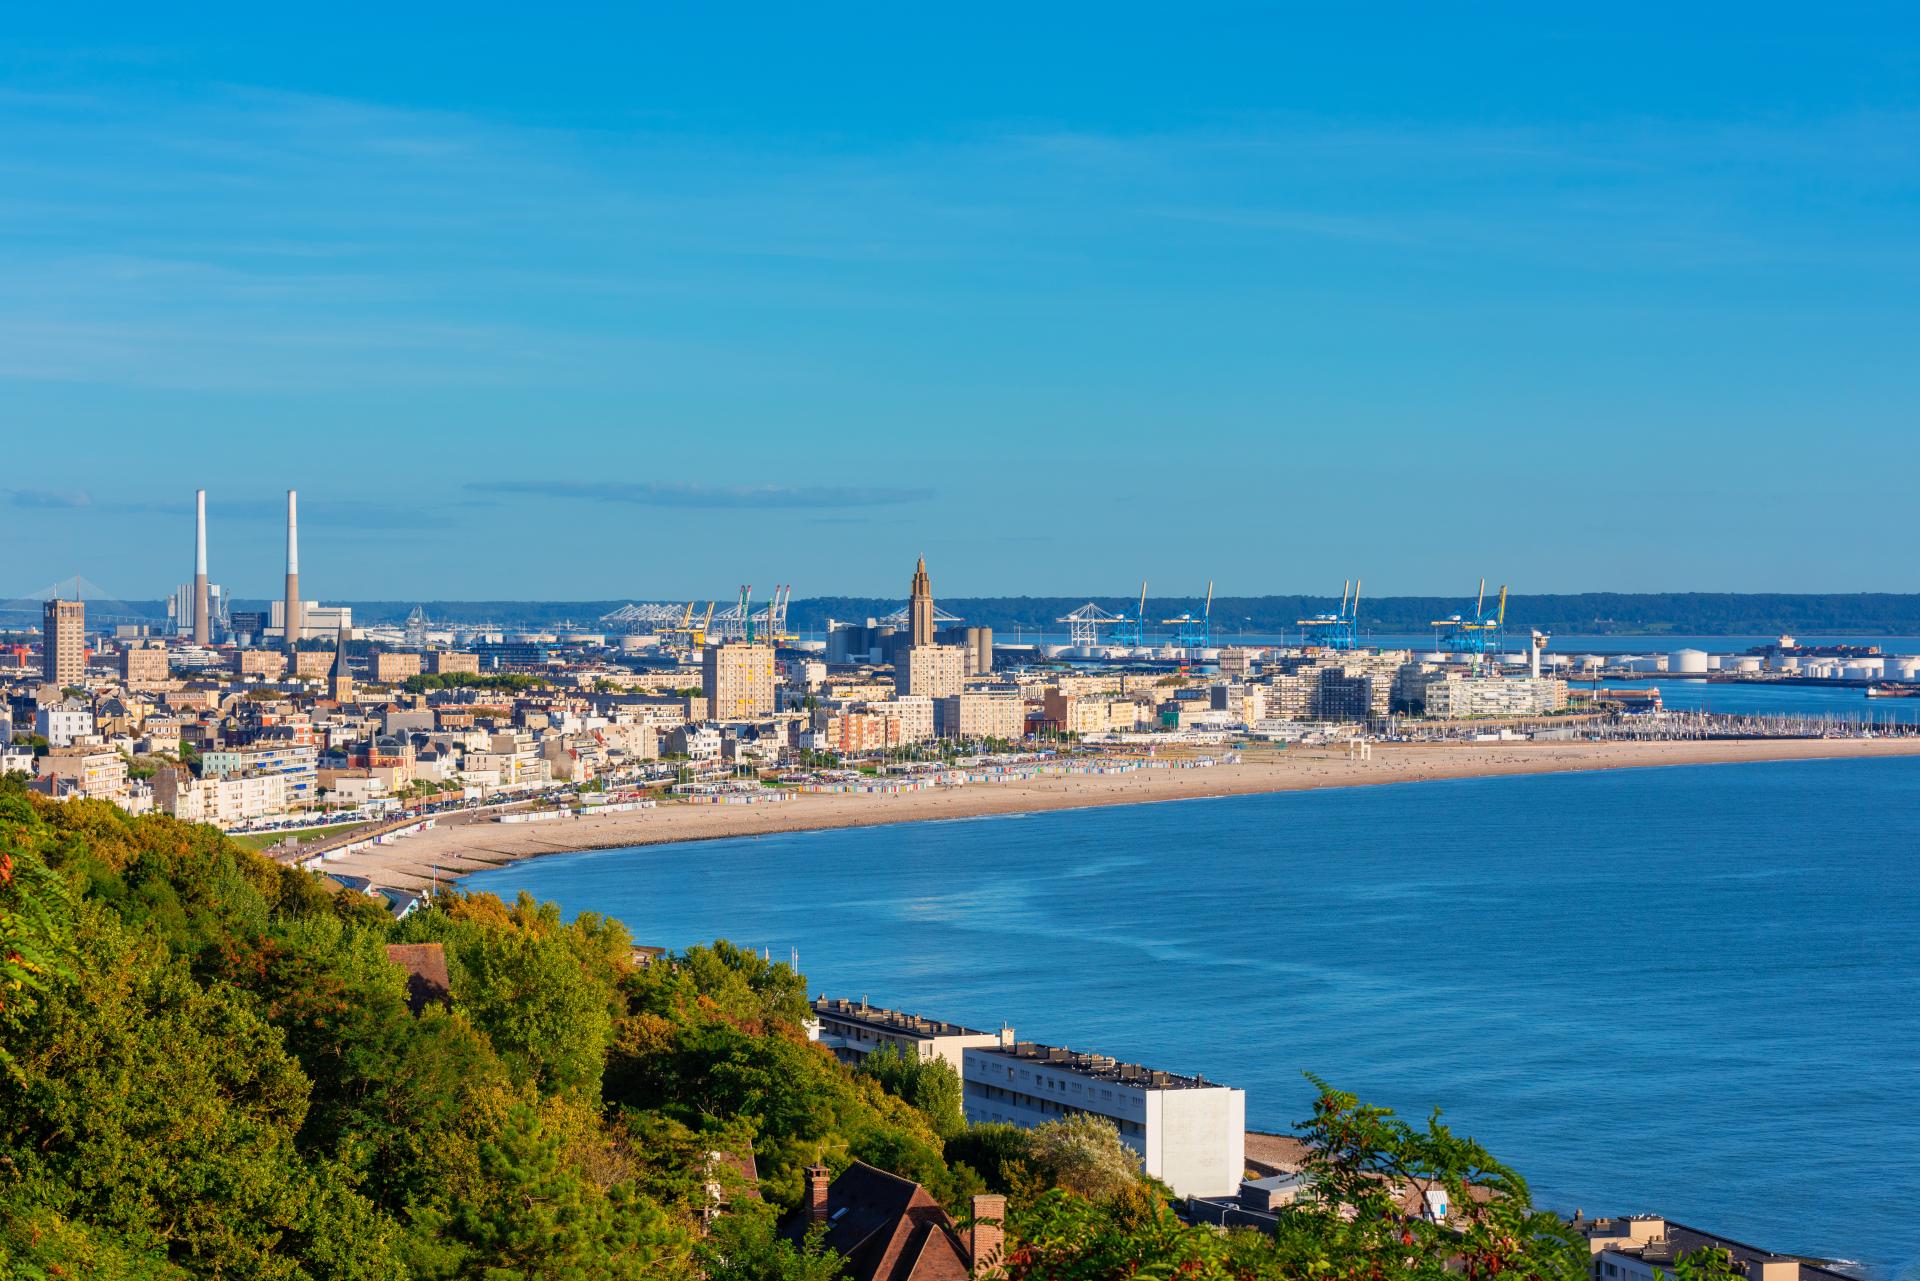 Le Havre, Normandie, France